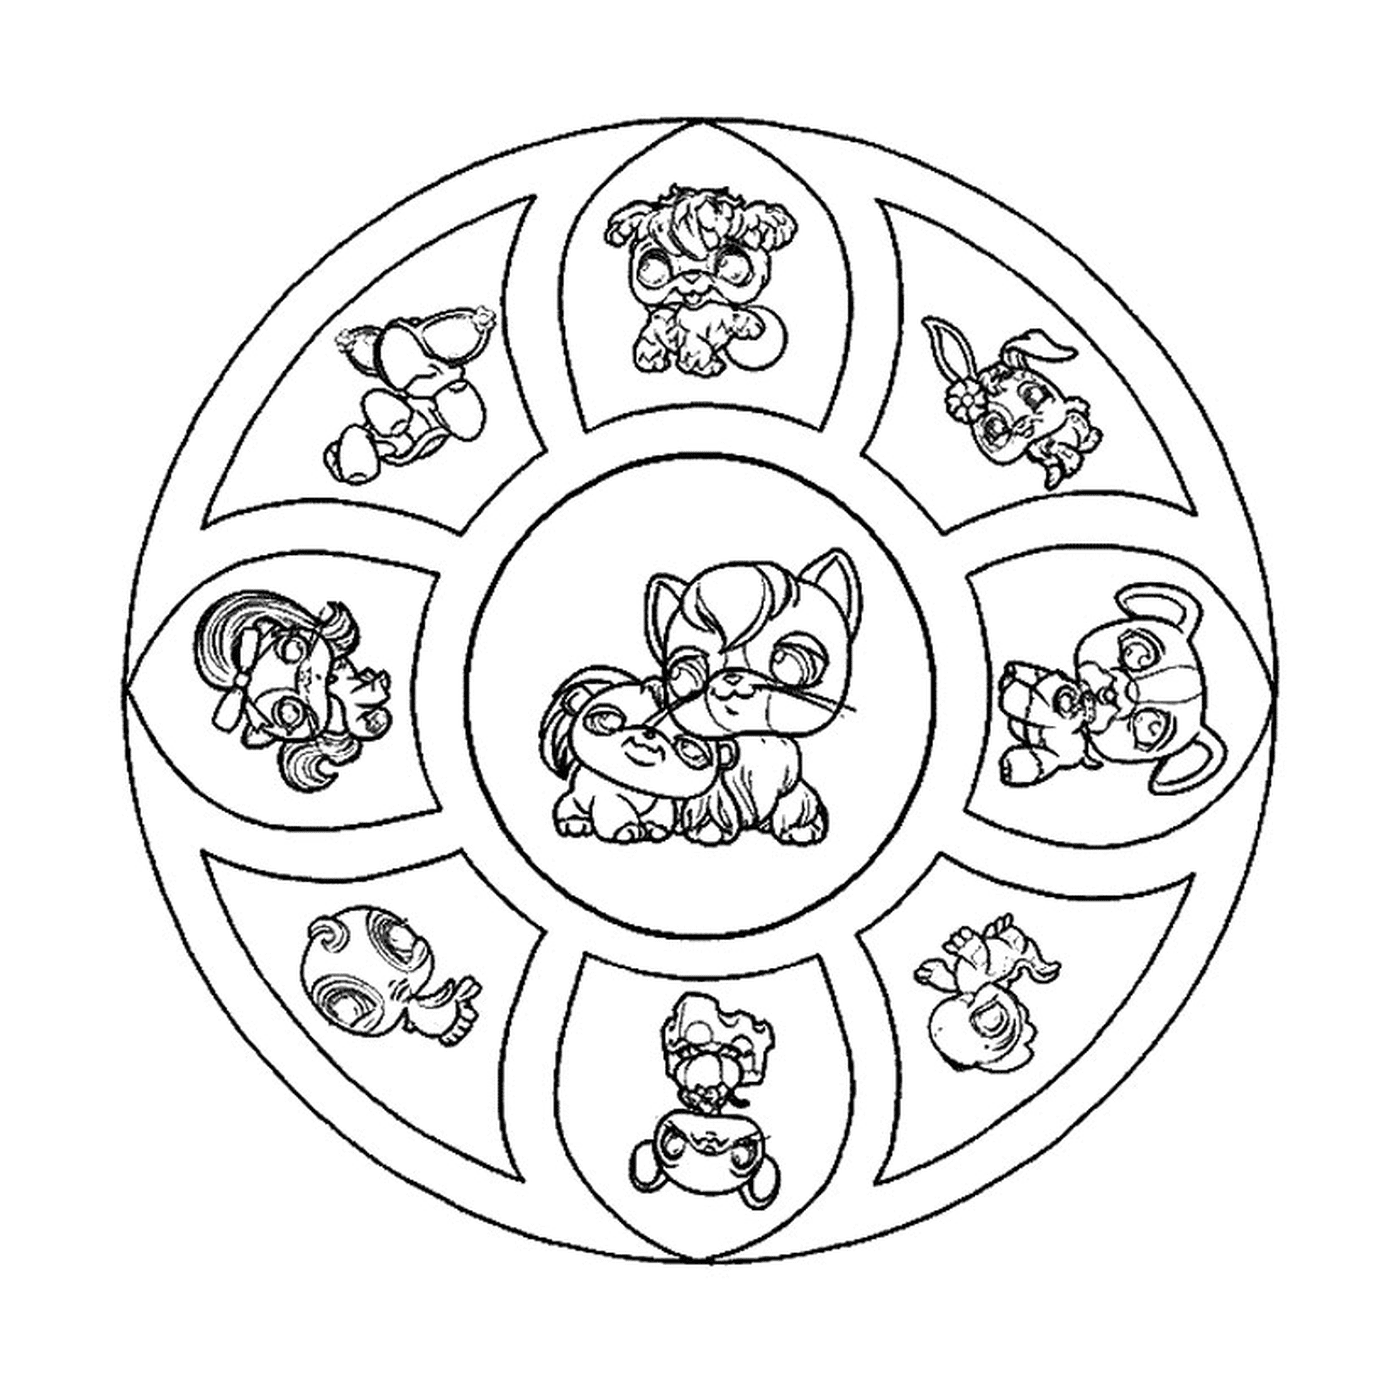  Mandala with animals 